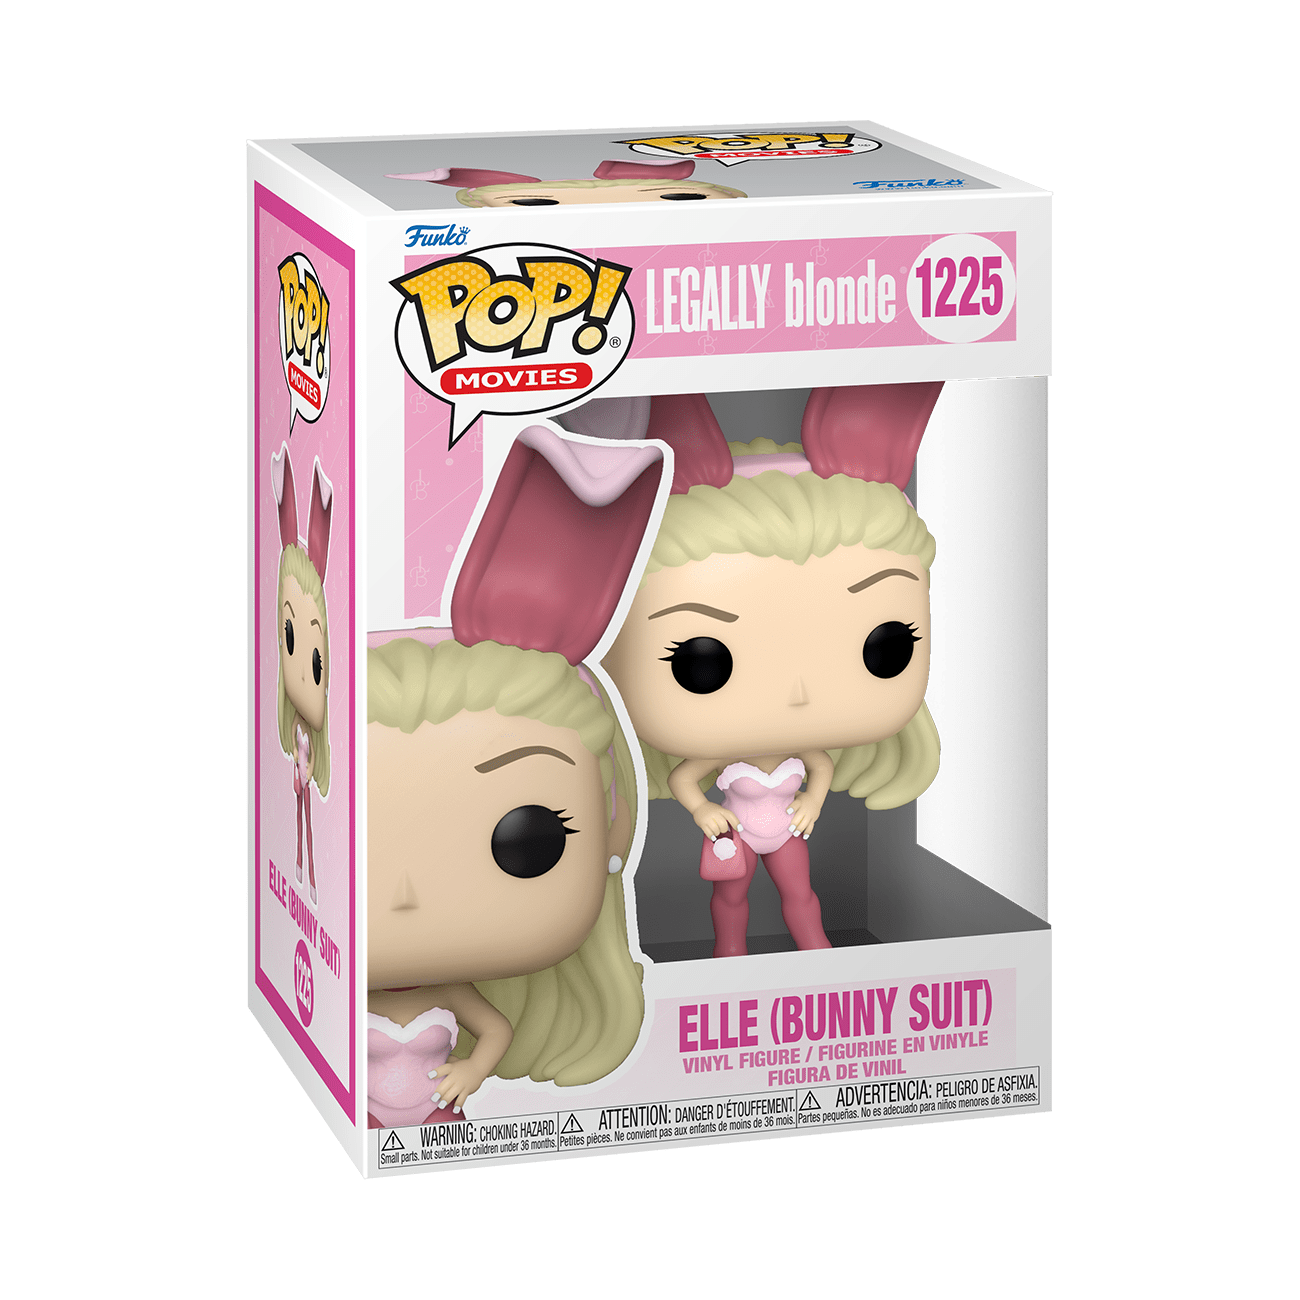 Funko Pop Movies: Legally Blonde - Elle Bunny Suit